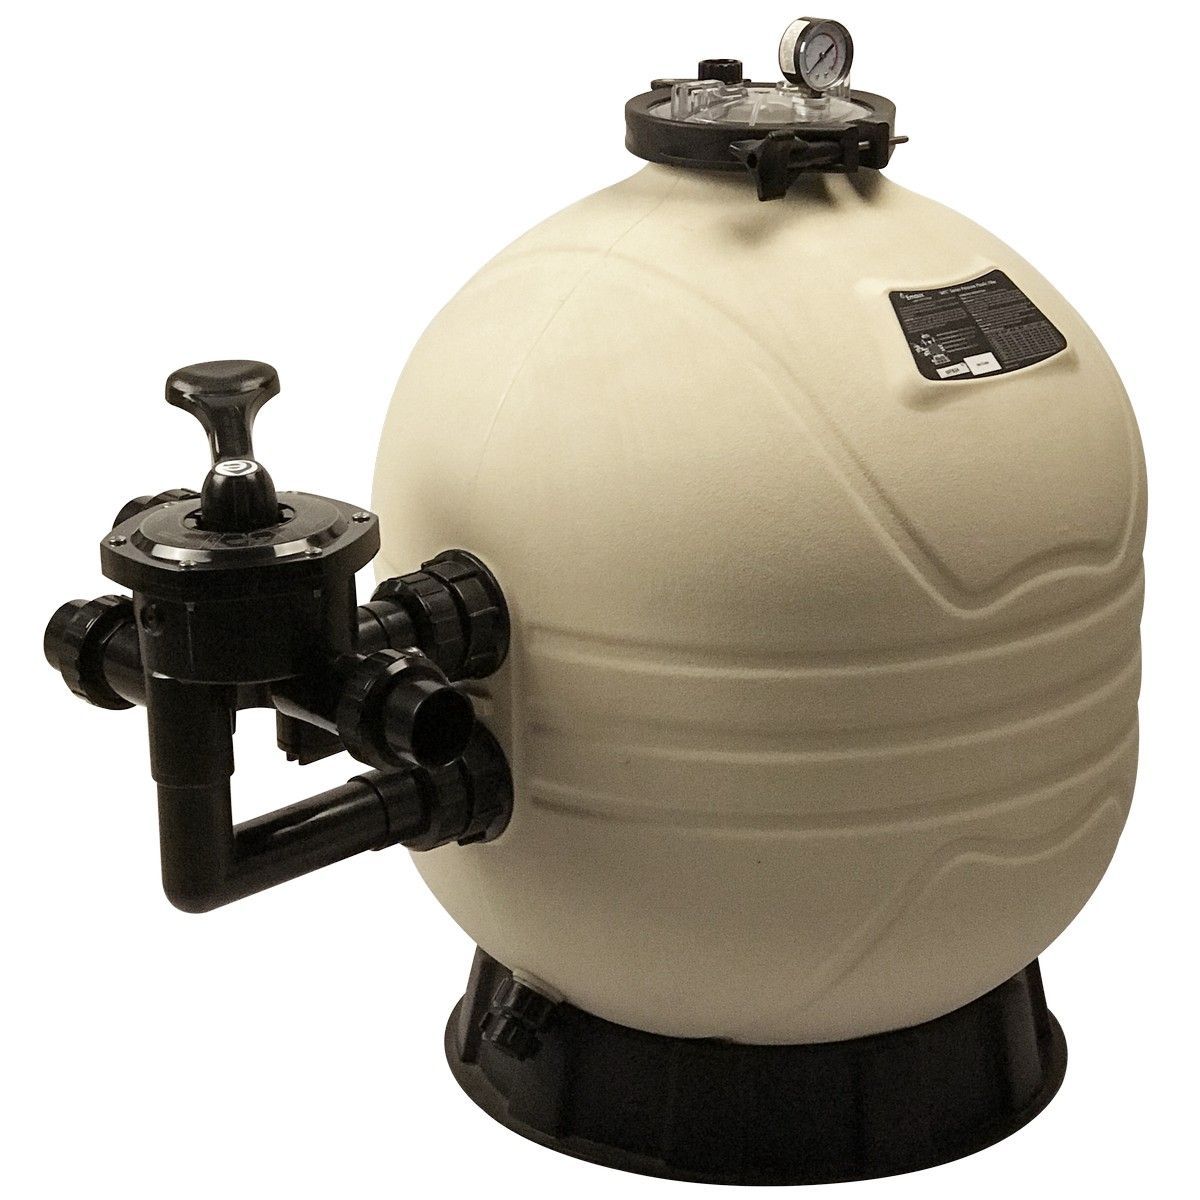 Фильтр AquaViva MFS35 (30,5m3/h, 875mm, 430kg, 63mm, бок)